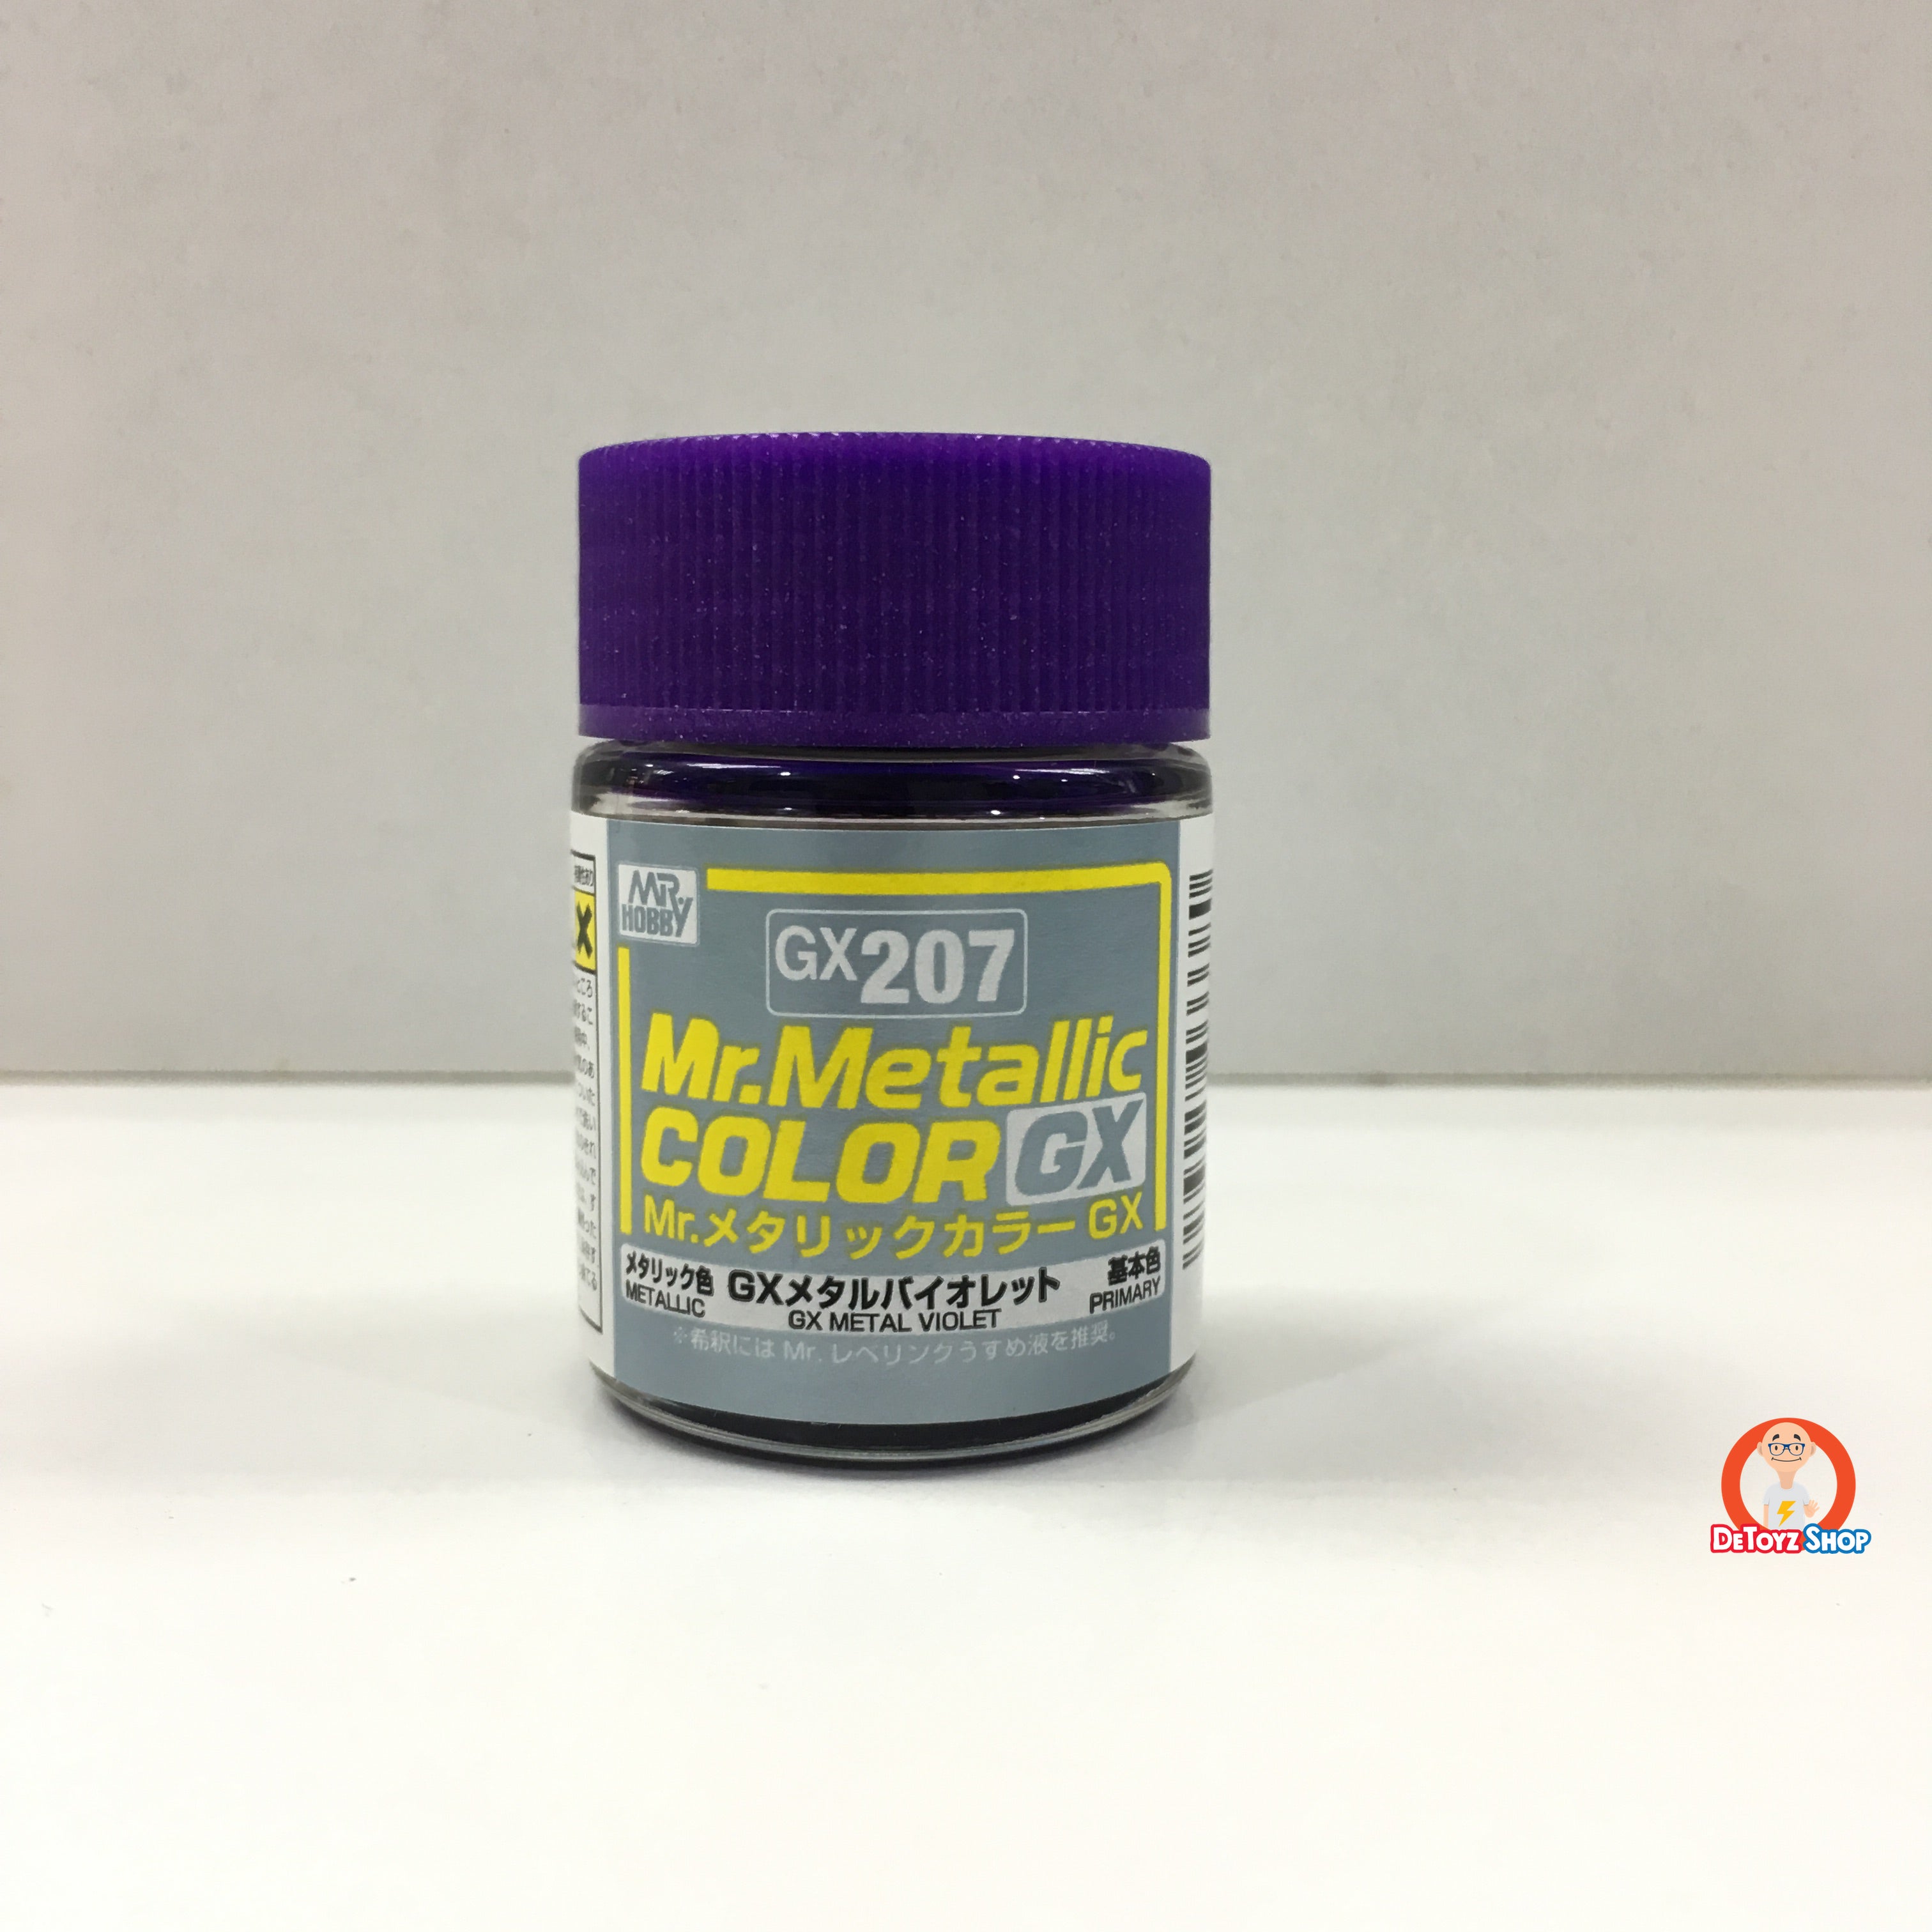 Mr Metallic Color GX-207 GX Metal Violet (18ml)